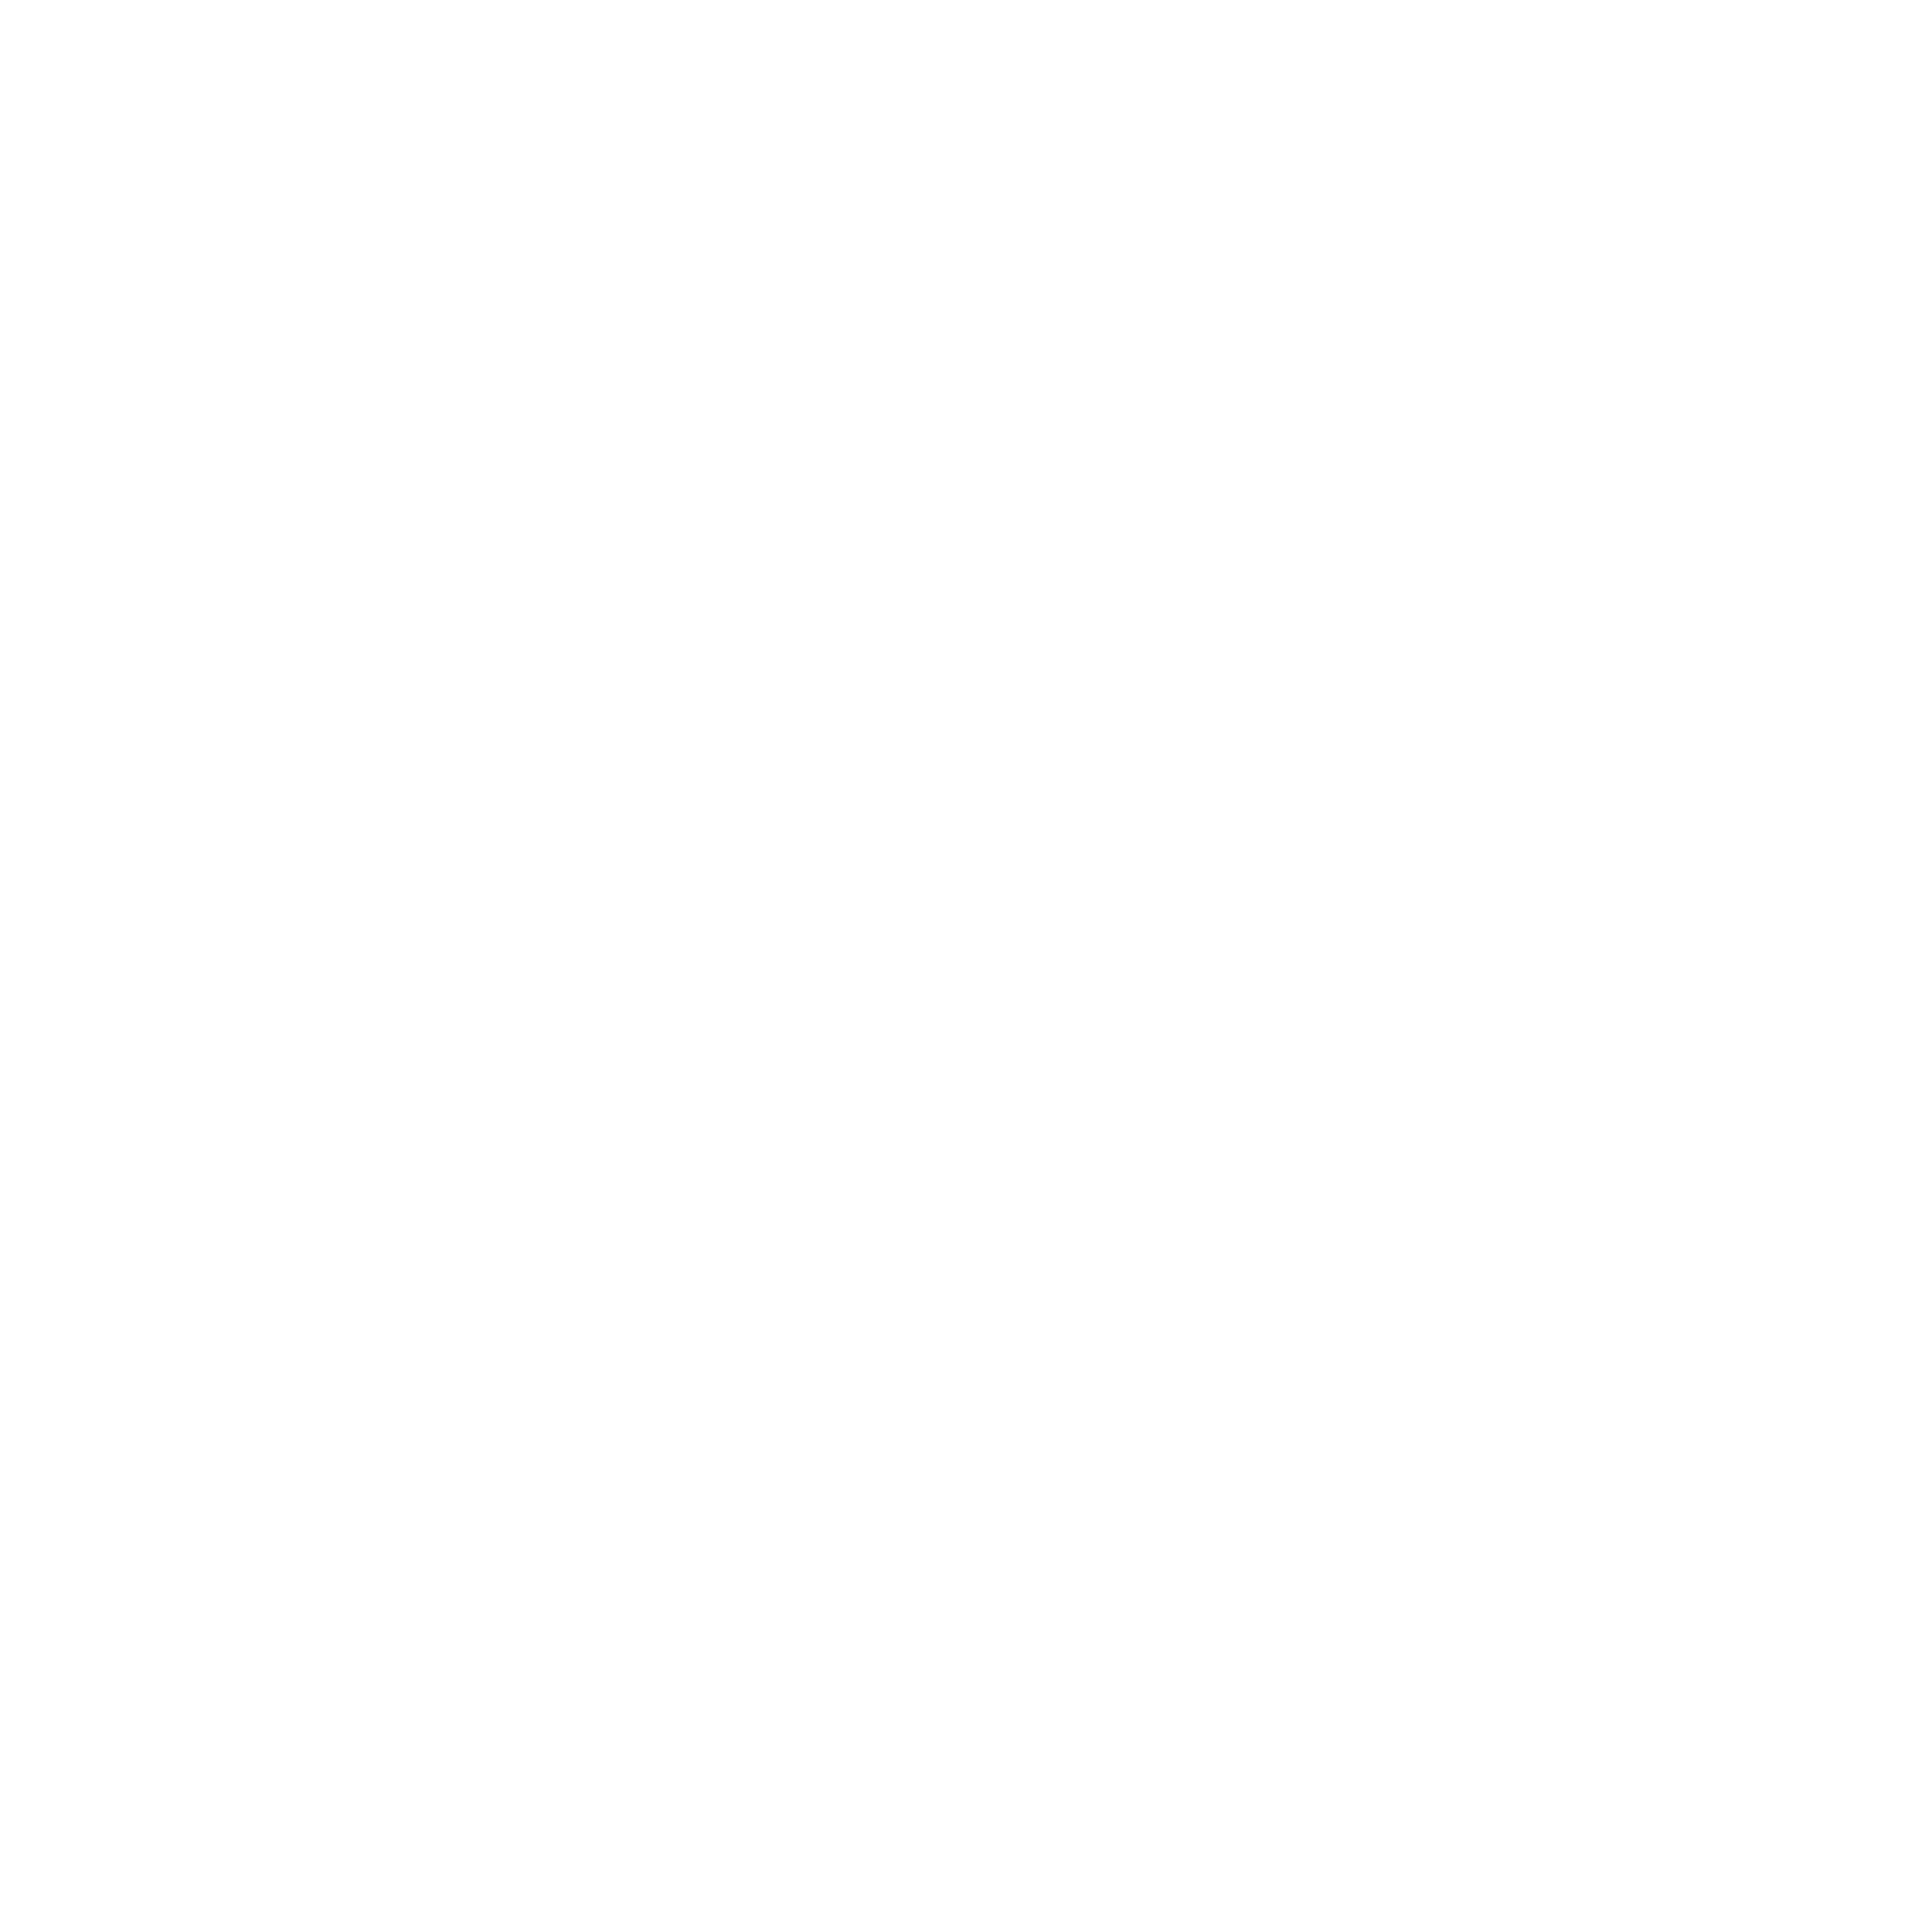 Vision mode white